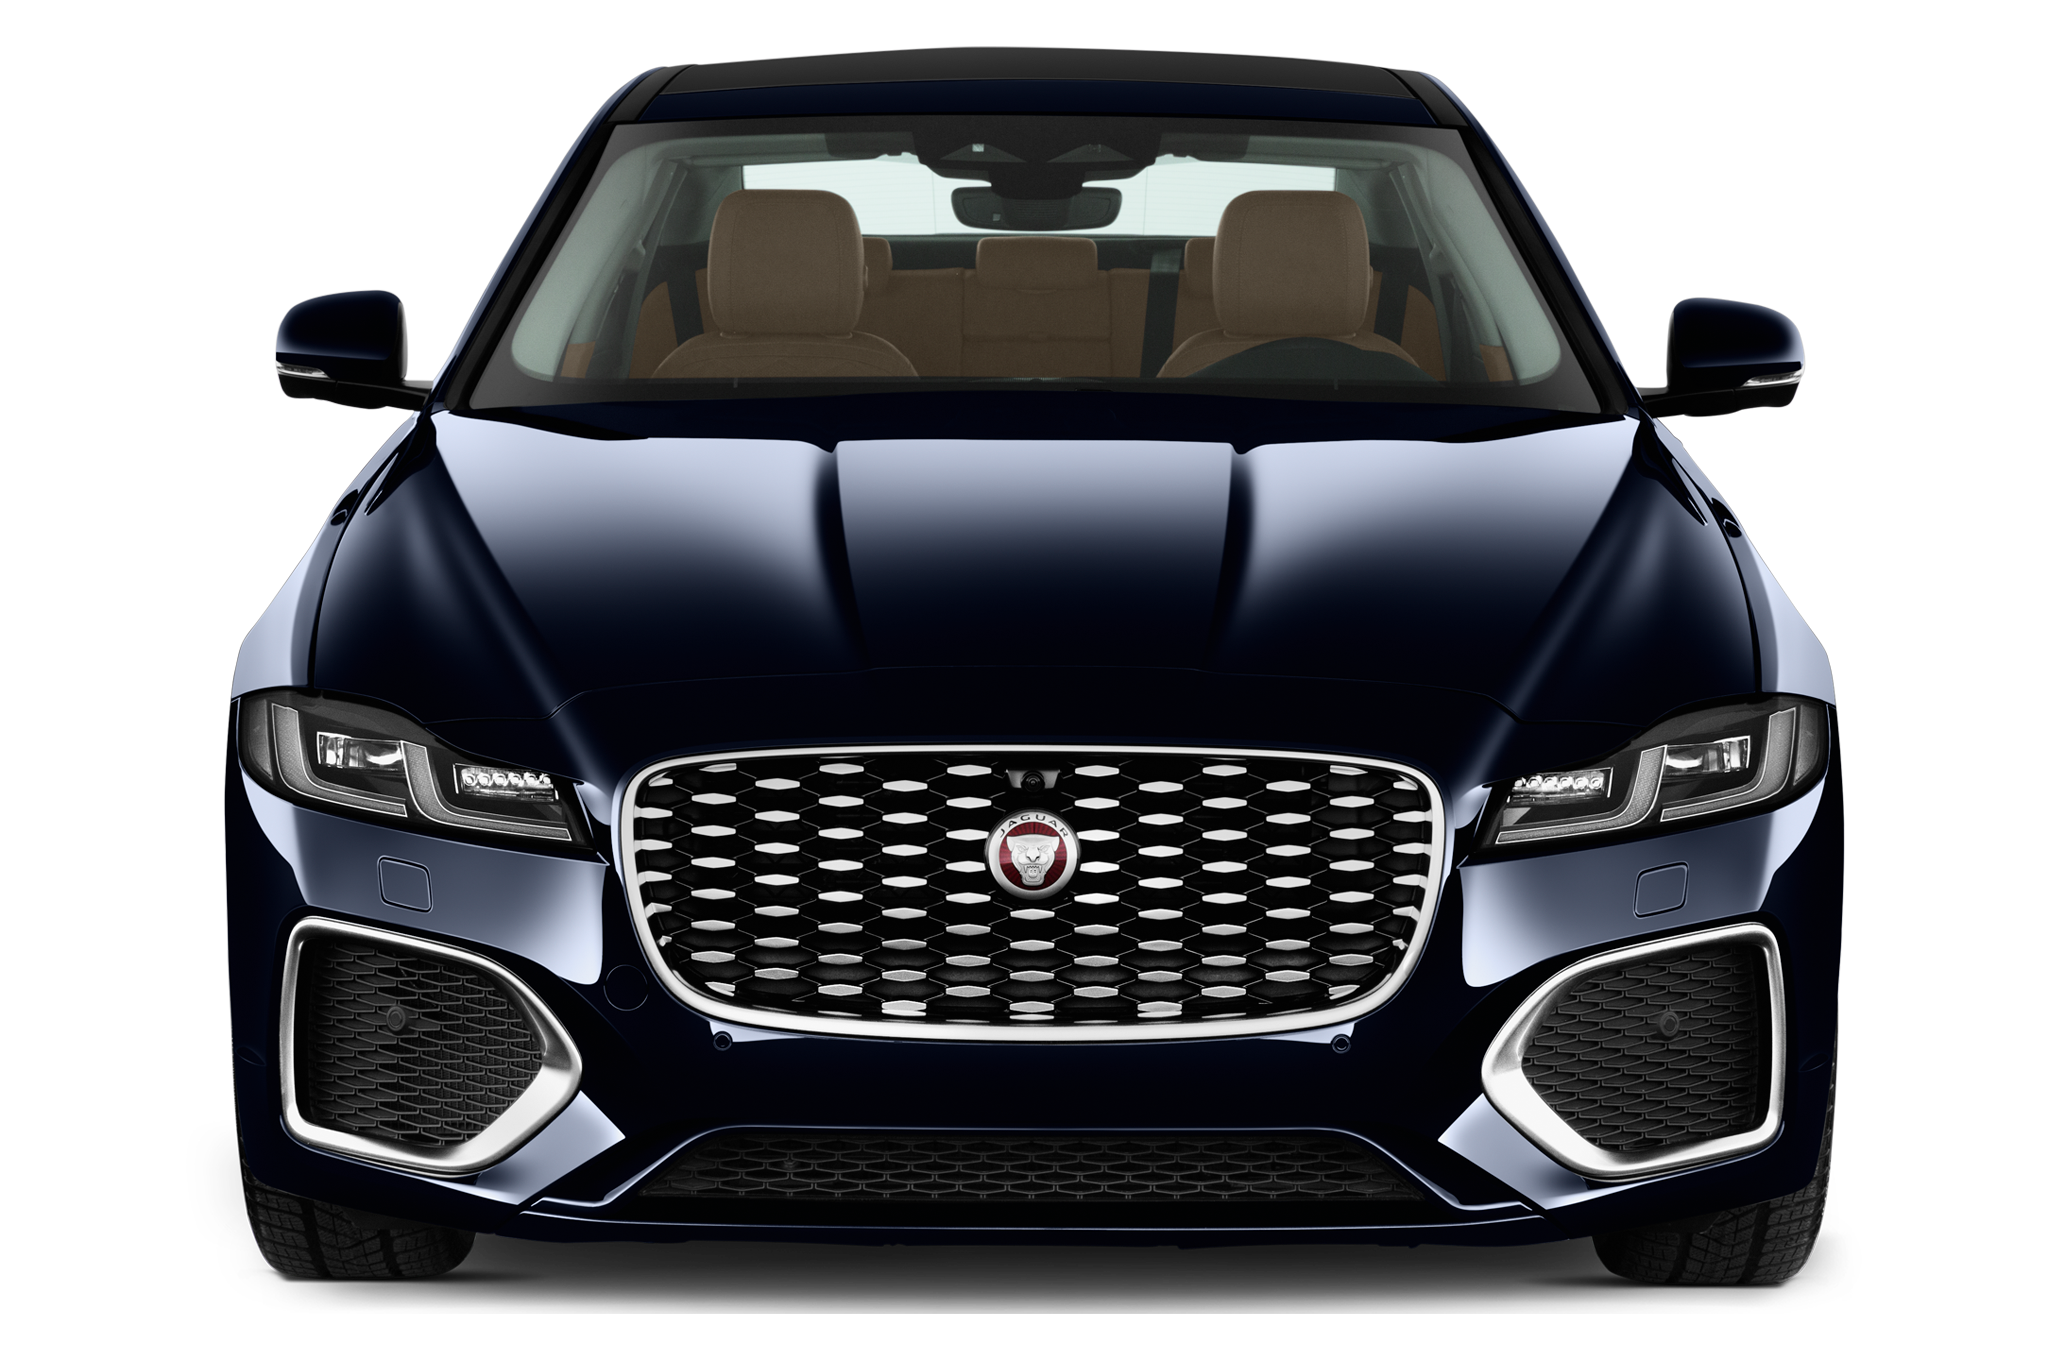 Jaguar XF (Baujahr 2021) SE 4 Türen Frontansicht